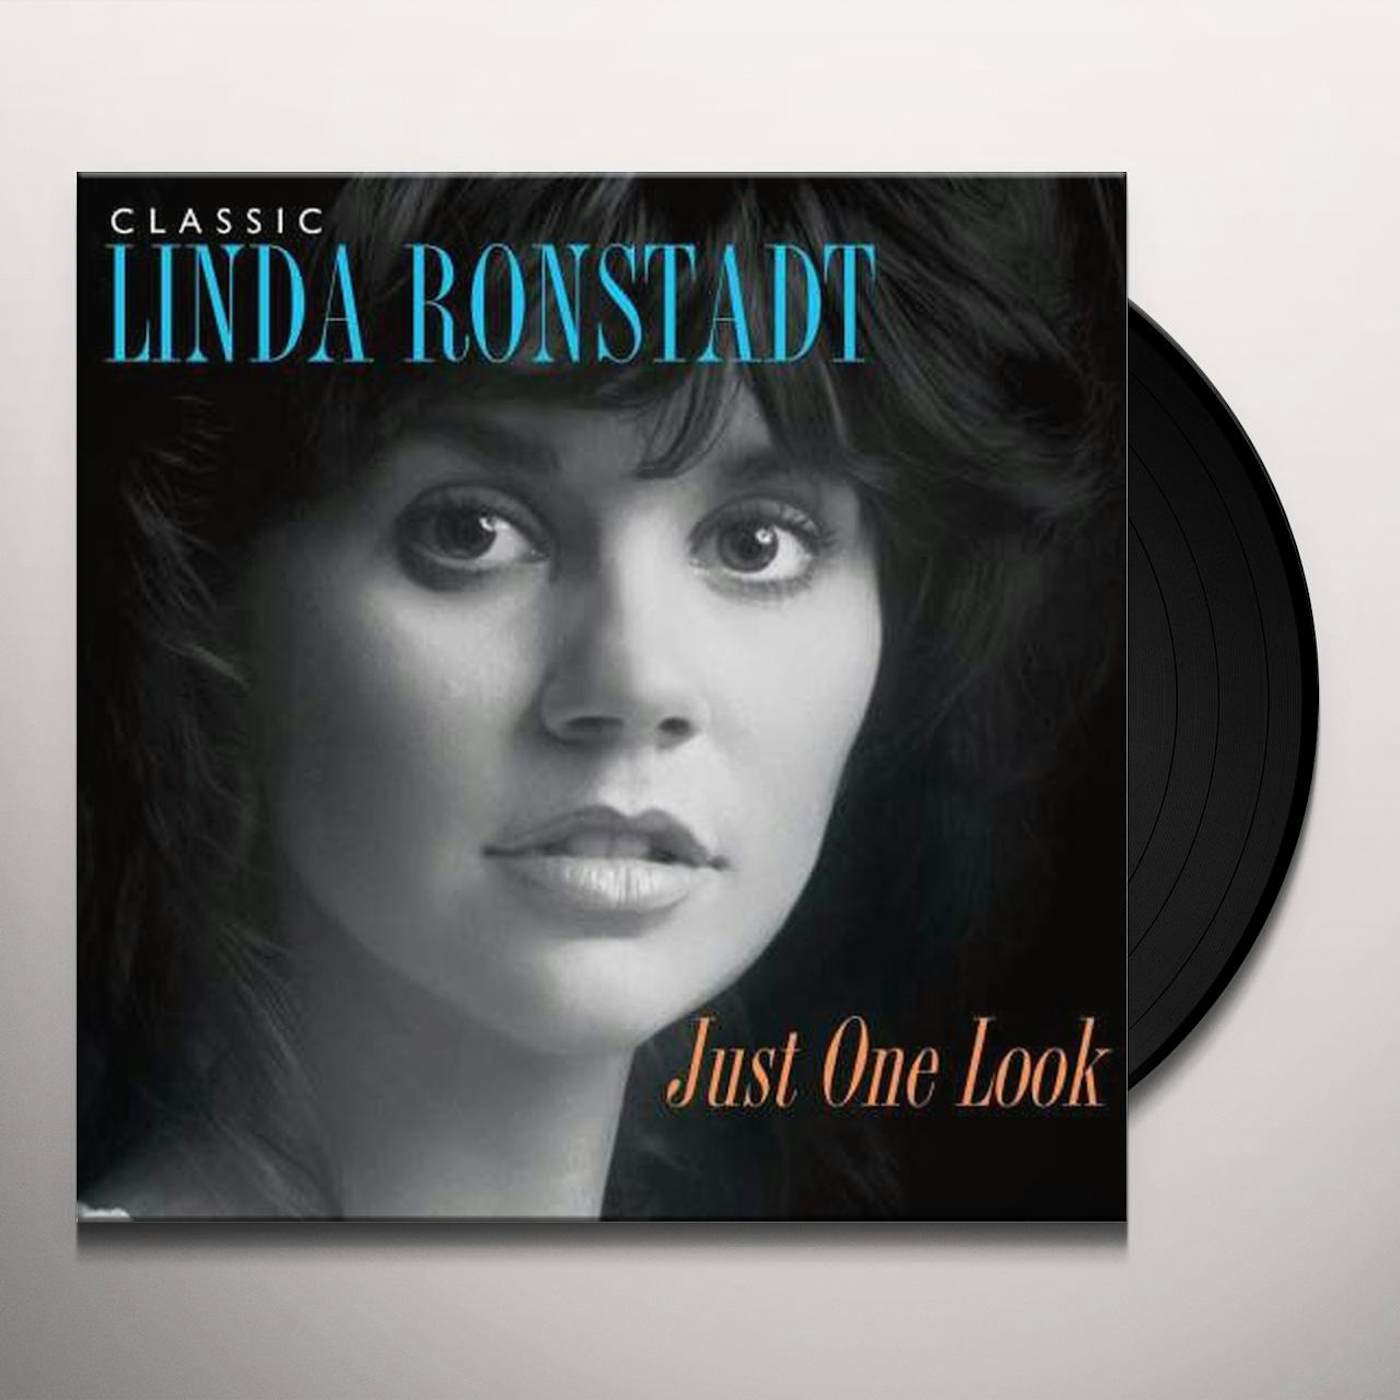 JUST ONE LOOK: CLASSIC LINDA RONSTADT Vinyl Record